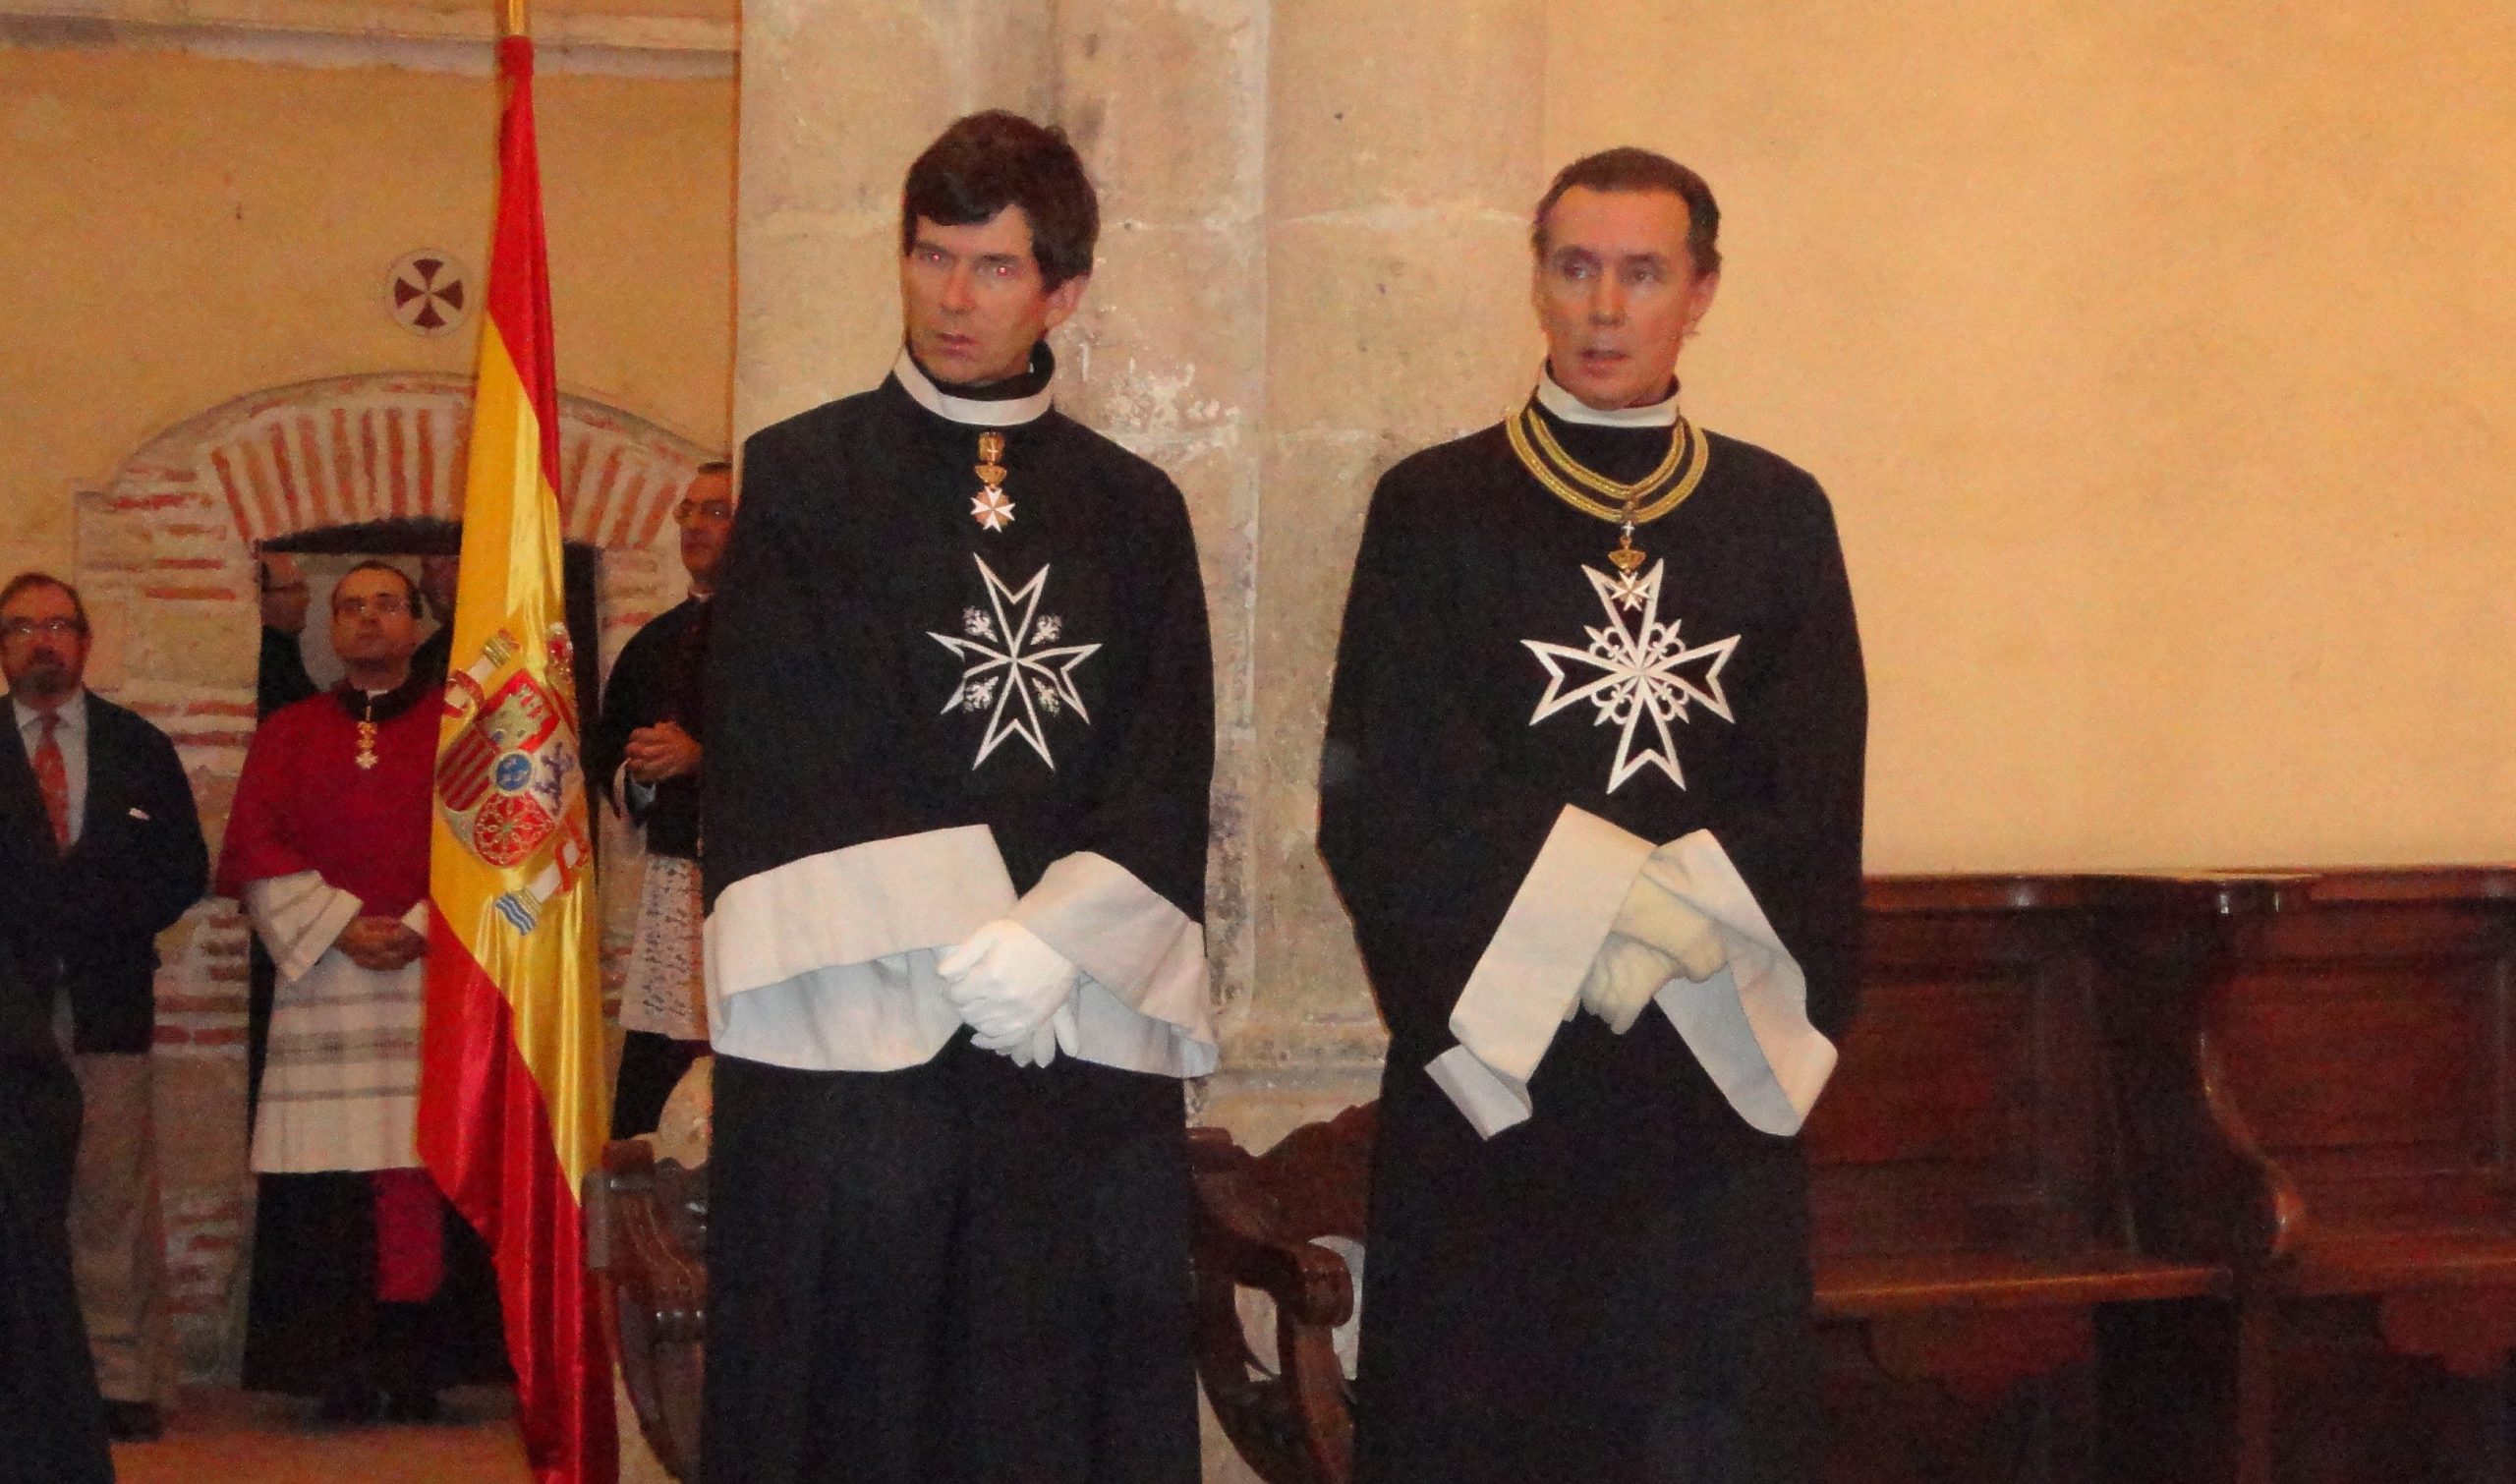 Candlemas Order of Malta